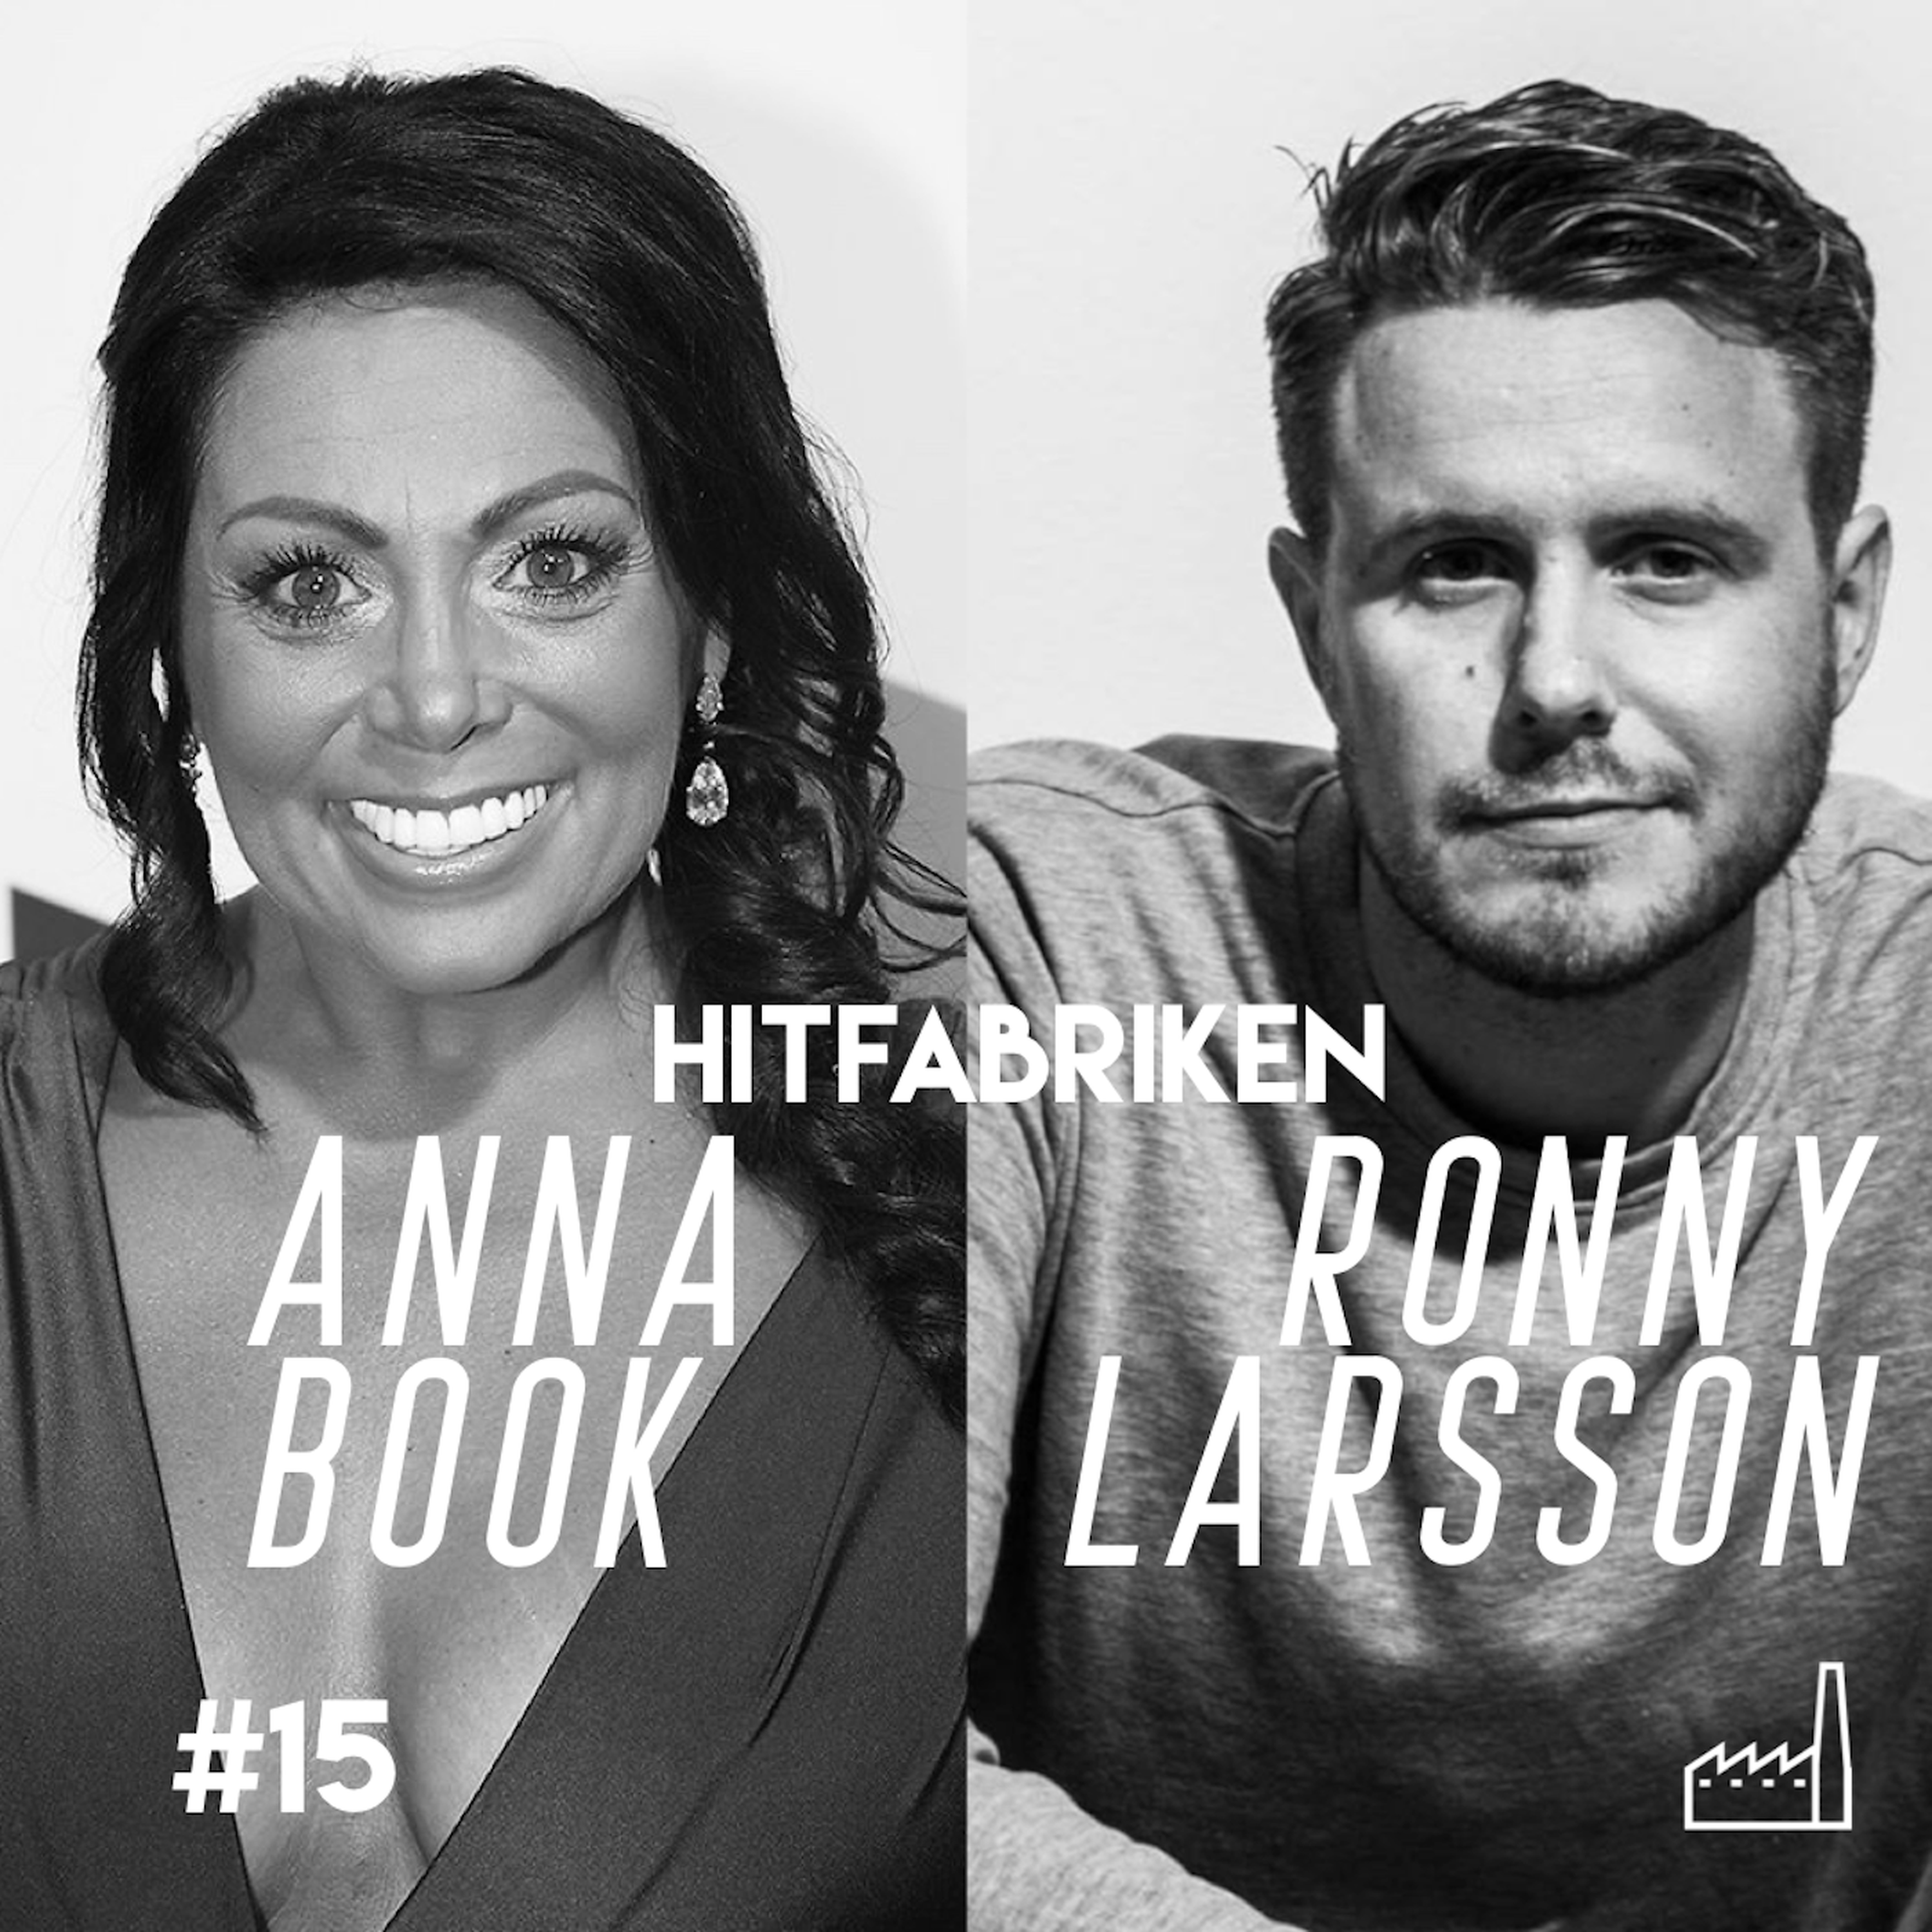 15. Anna Book & Ronny Larsson, Mellofinaleftersnack 2020